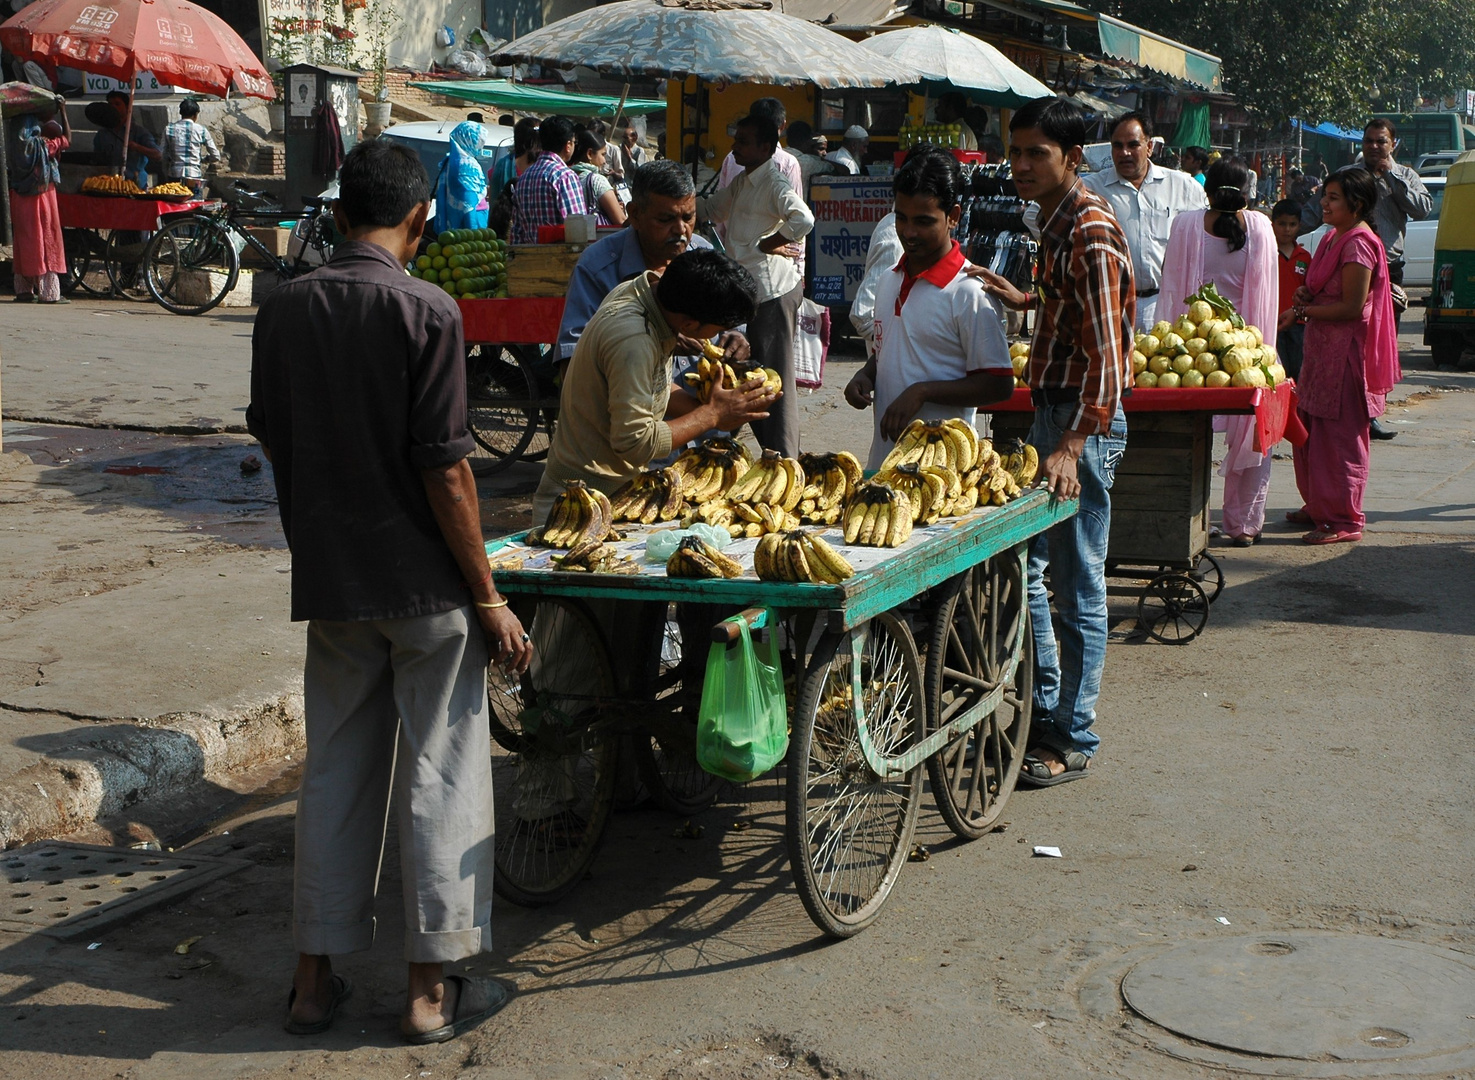 Dehli street life (14) - bananas